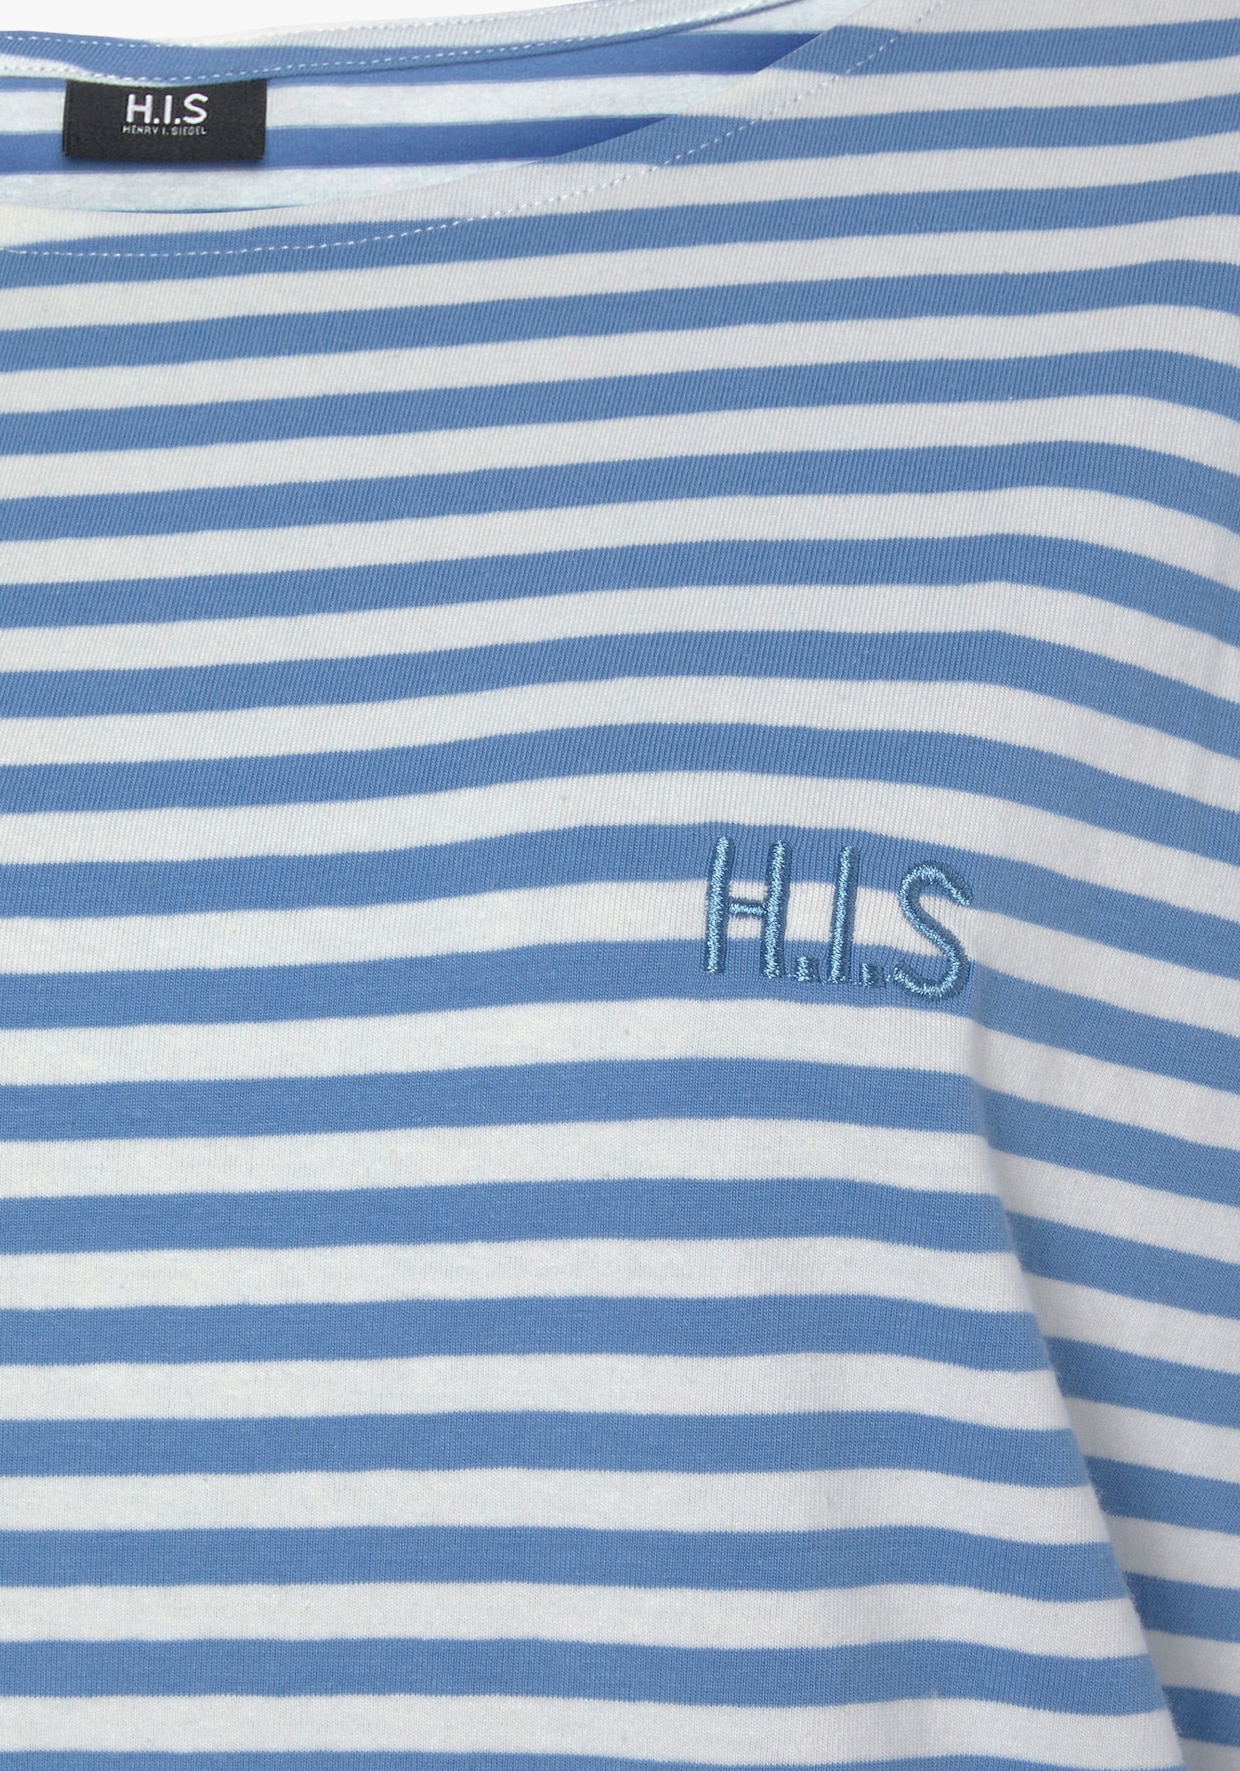 H.I.S Nachthemd - blau